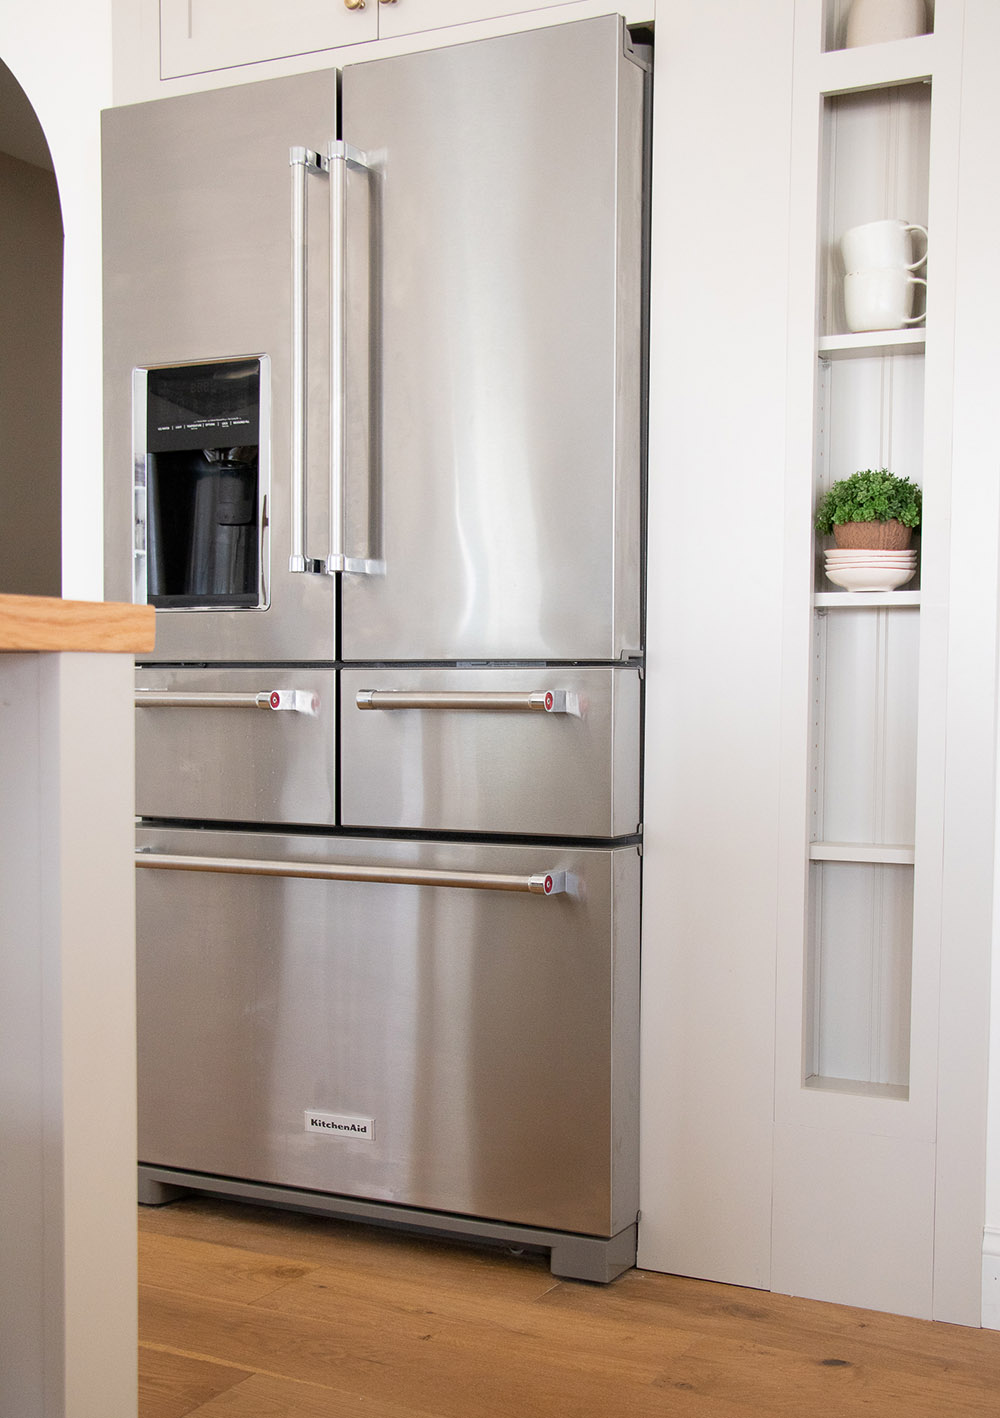 A stainless steel KitchenAid refrigerator in a kitchen.